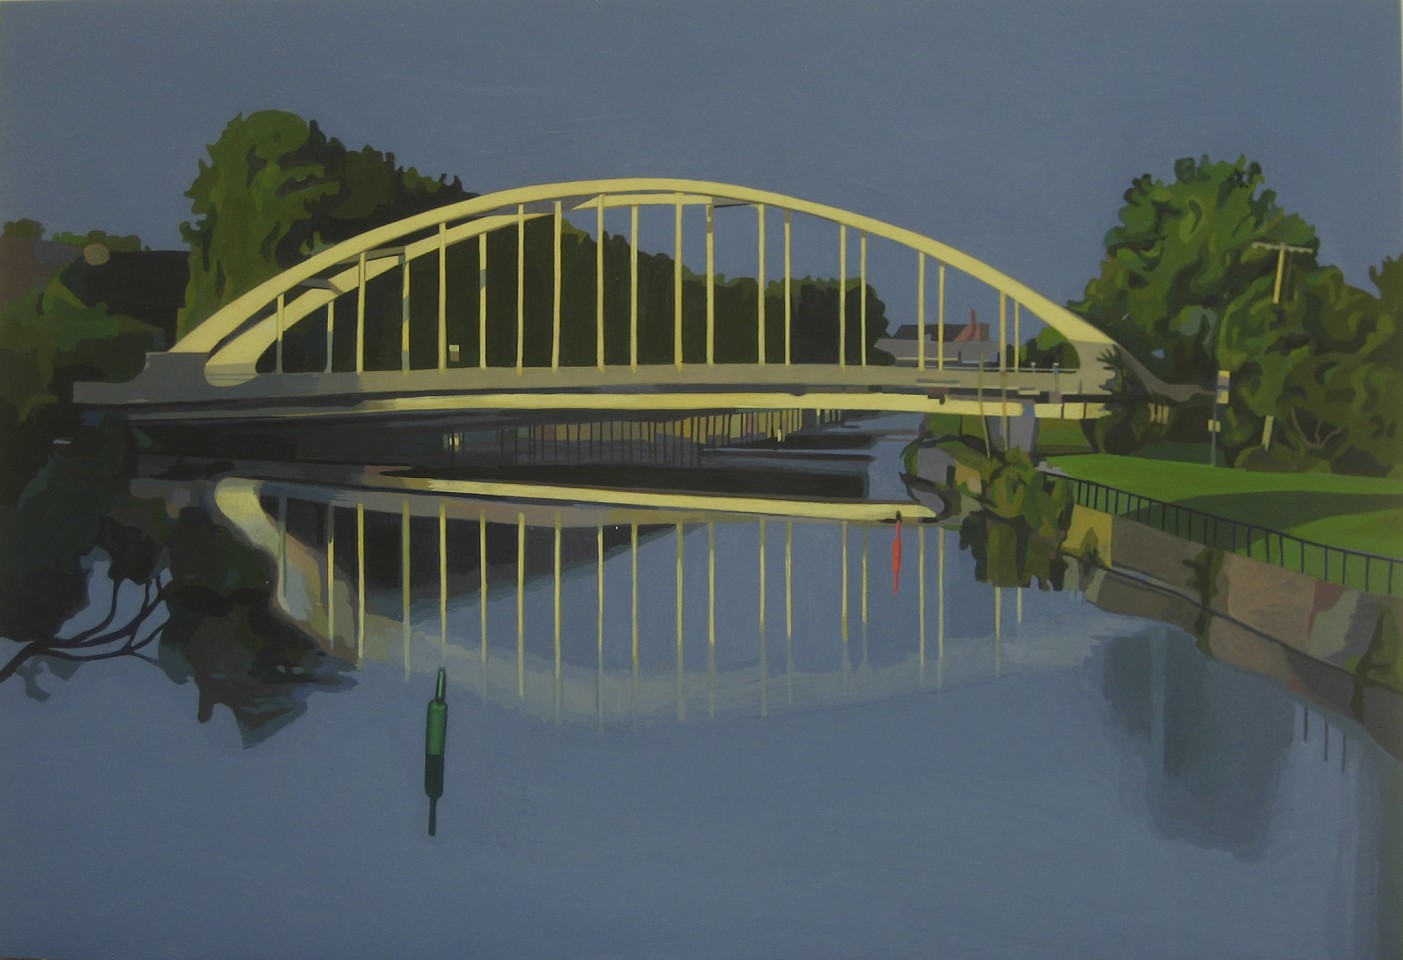 Michael Merrill
Bridge, 2013
Flashe/panel, 13 1/2 x 19 in.